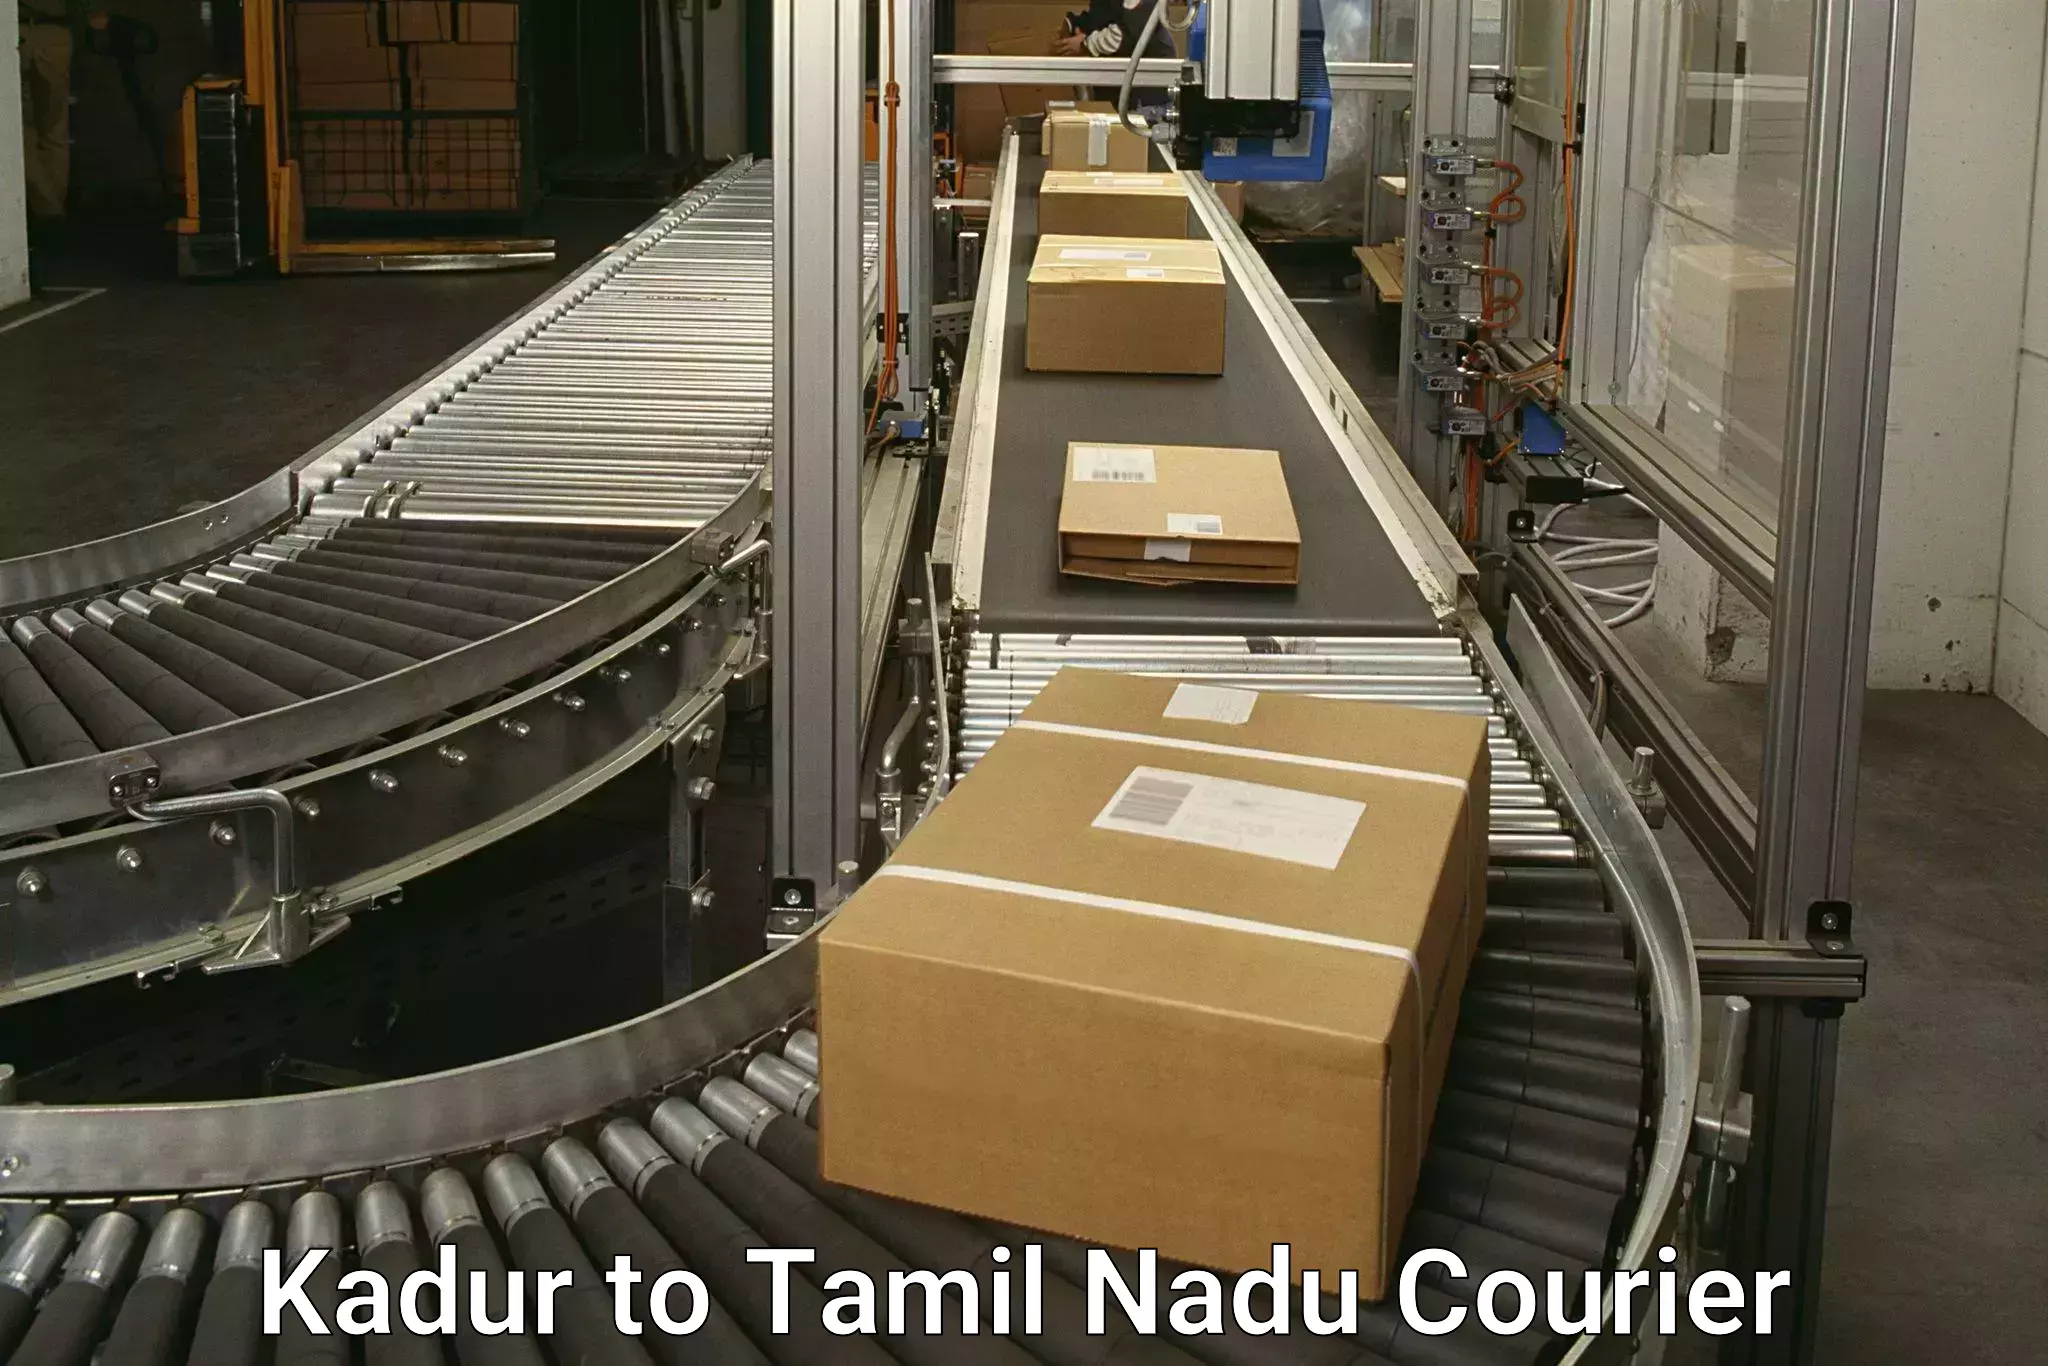 Expedited shipping methods Kadur to Virudhunagar